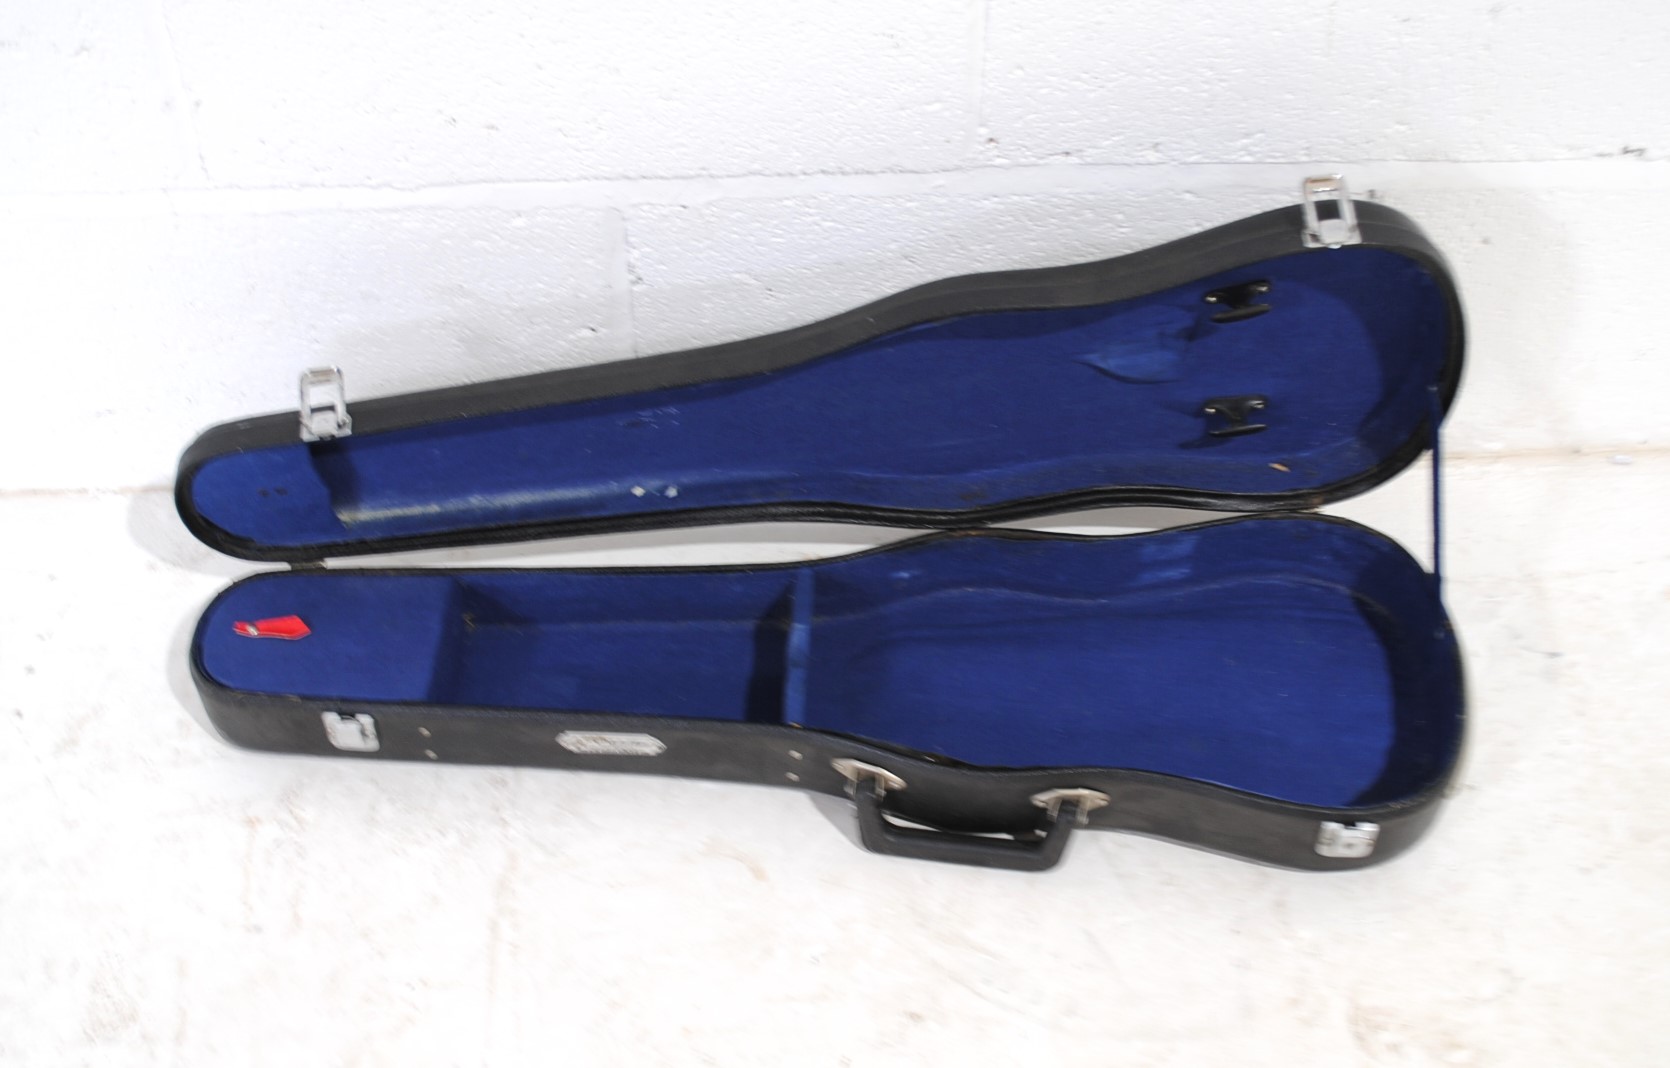 A 3/4 size violin, with Skylark Brand hard case - length of violin 56cm - Image 2 of 12